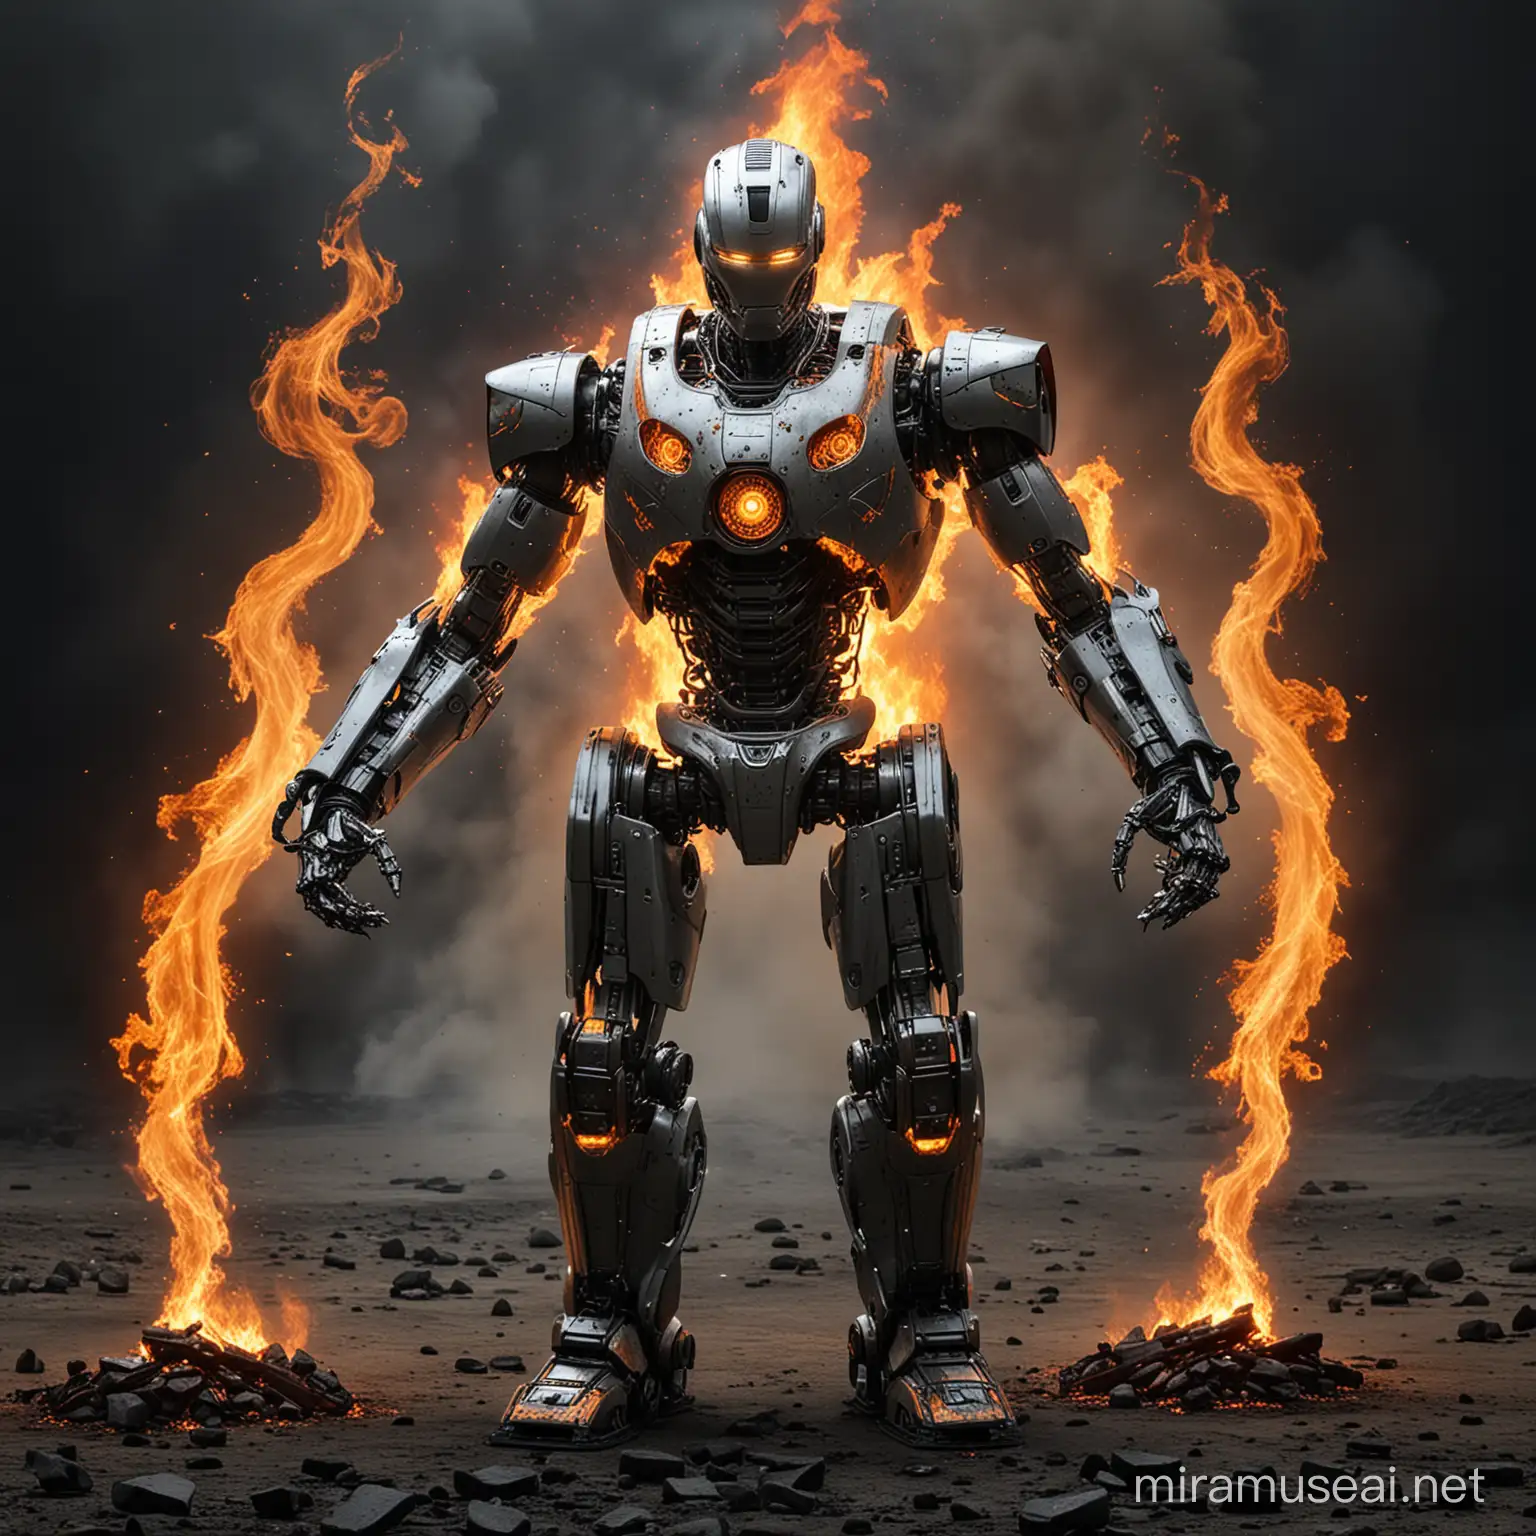 Robotic Firefighter Battling Flames